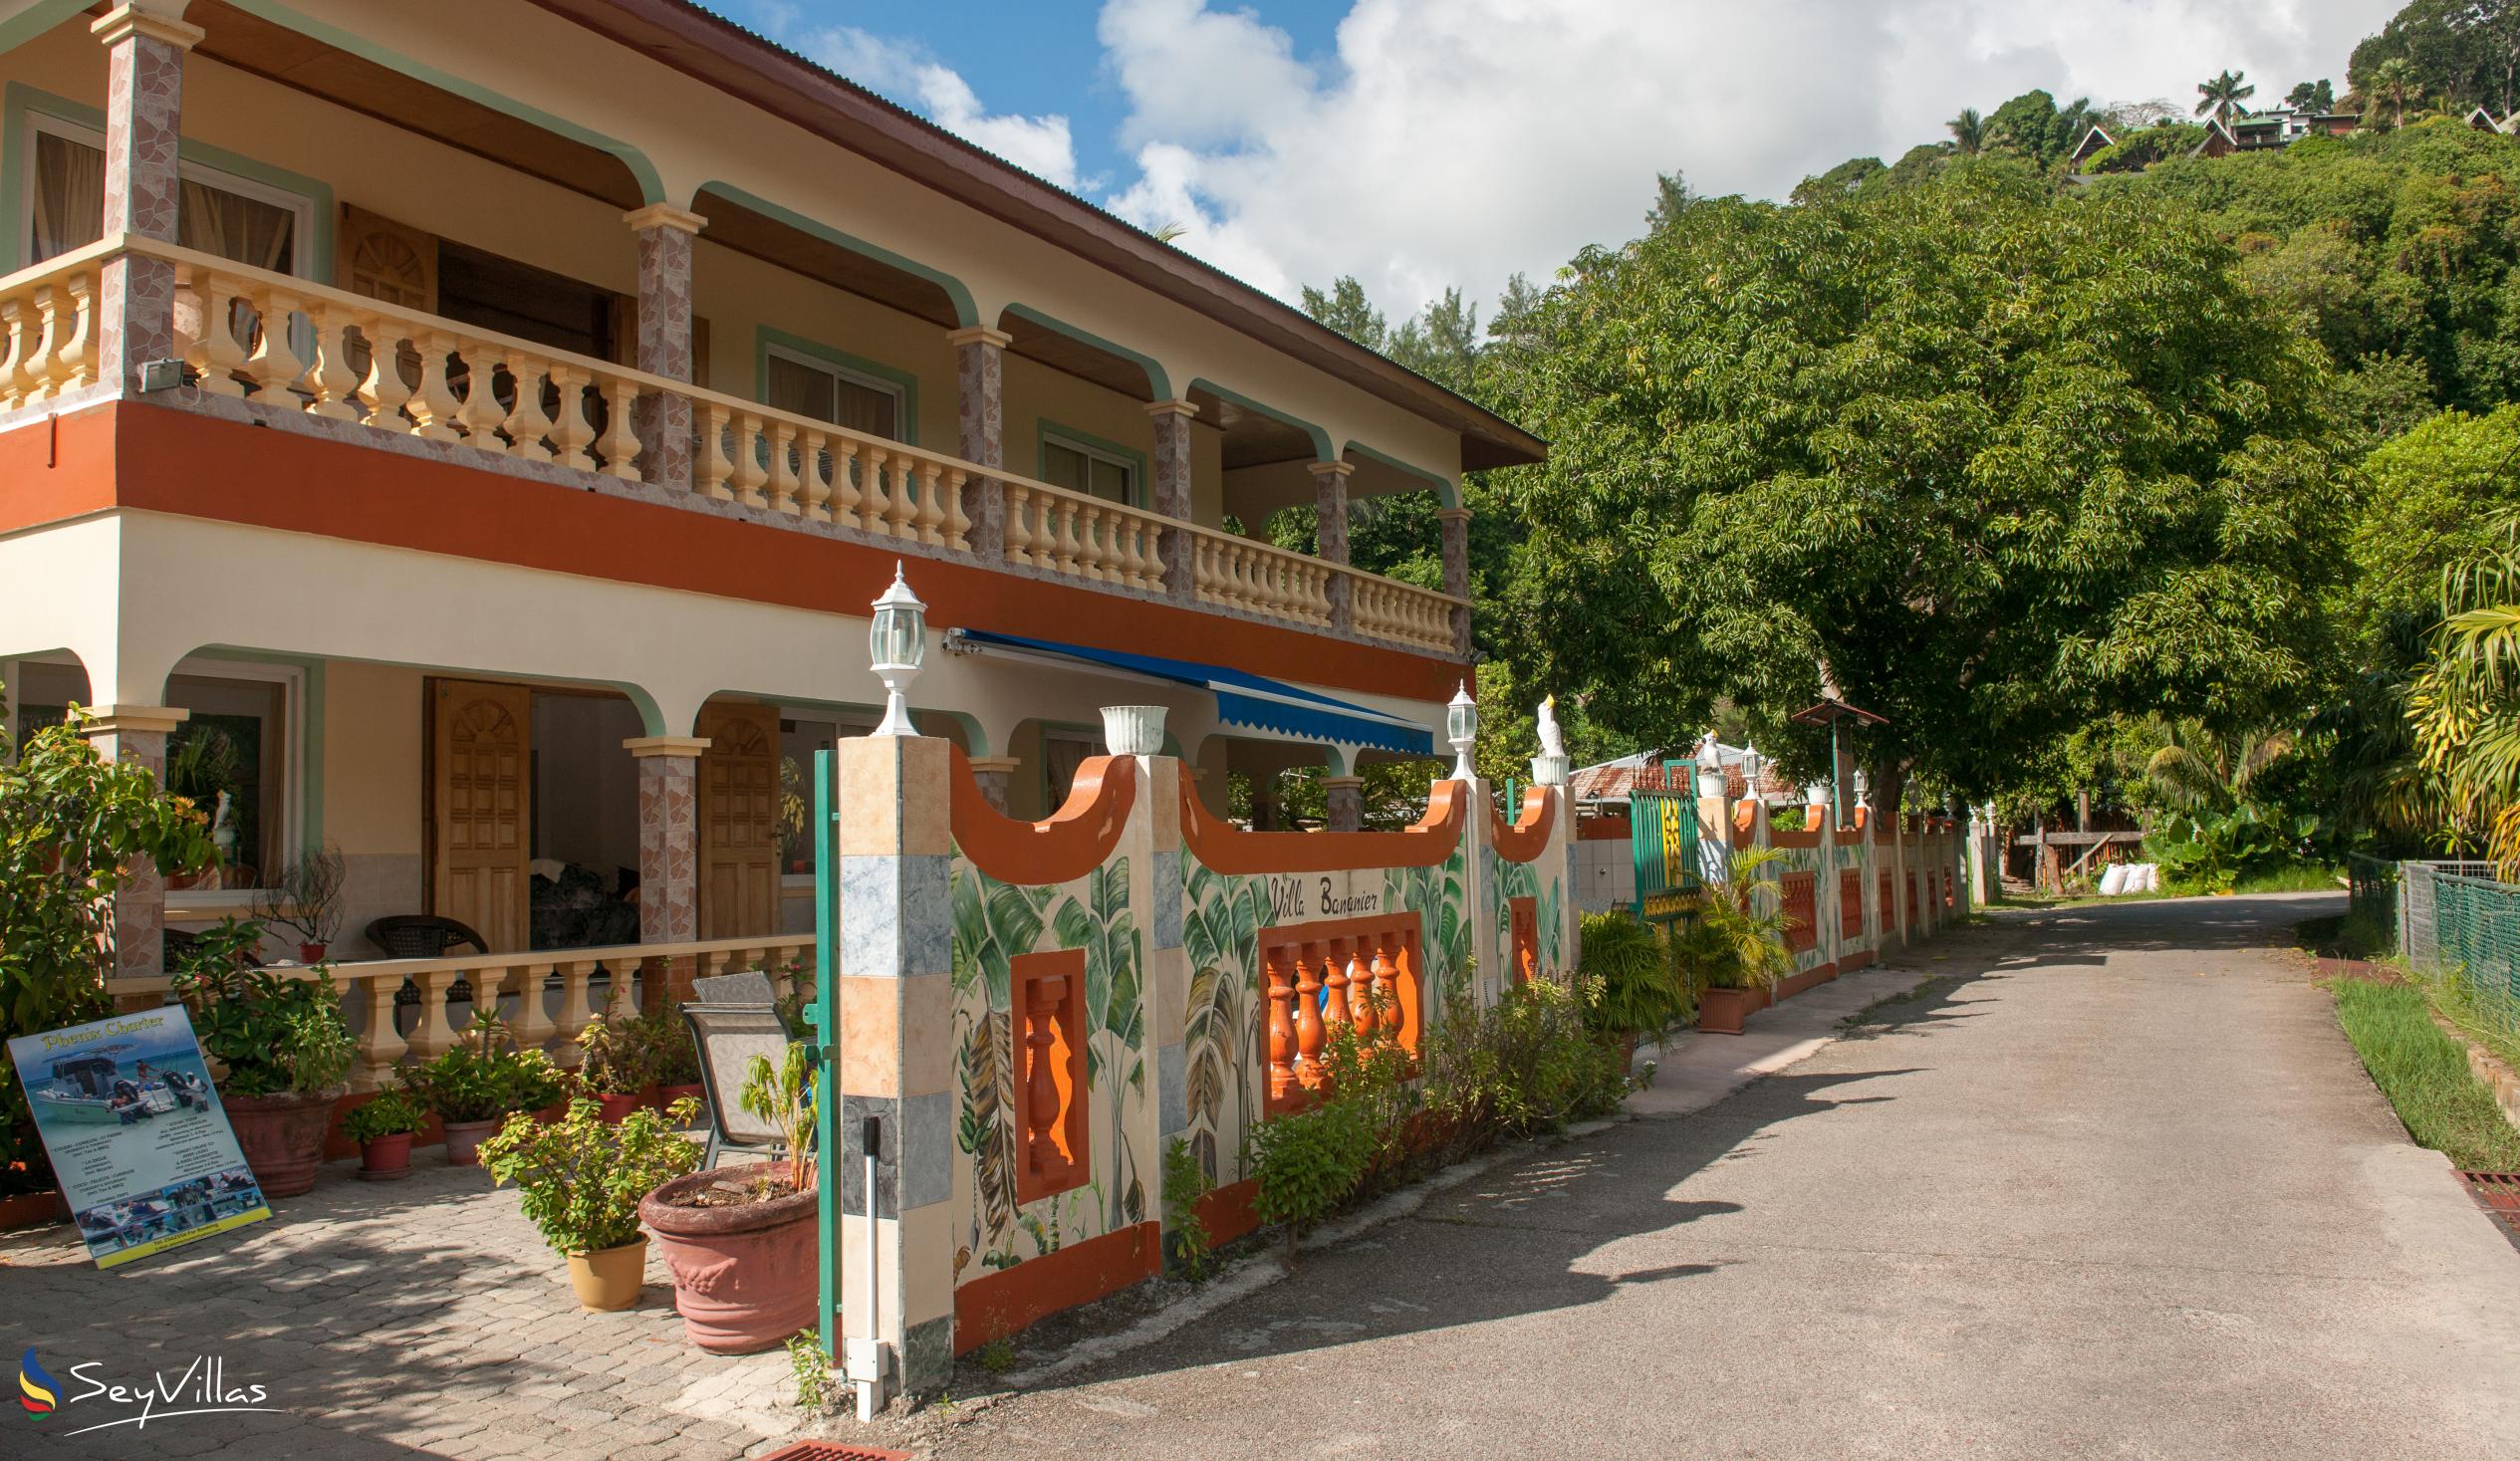 Photo 2: Villa Bananier - Location - Praslin (Seychelles)